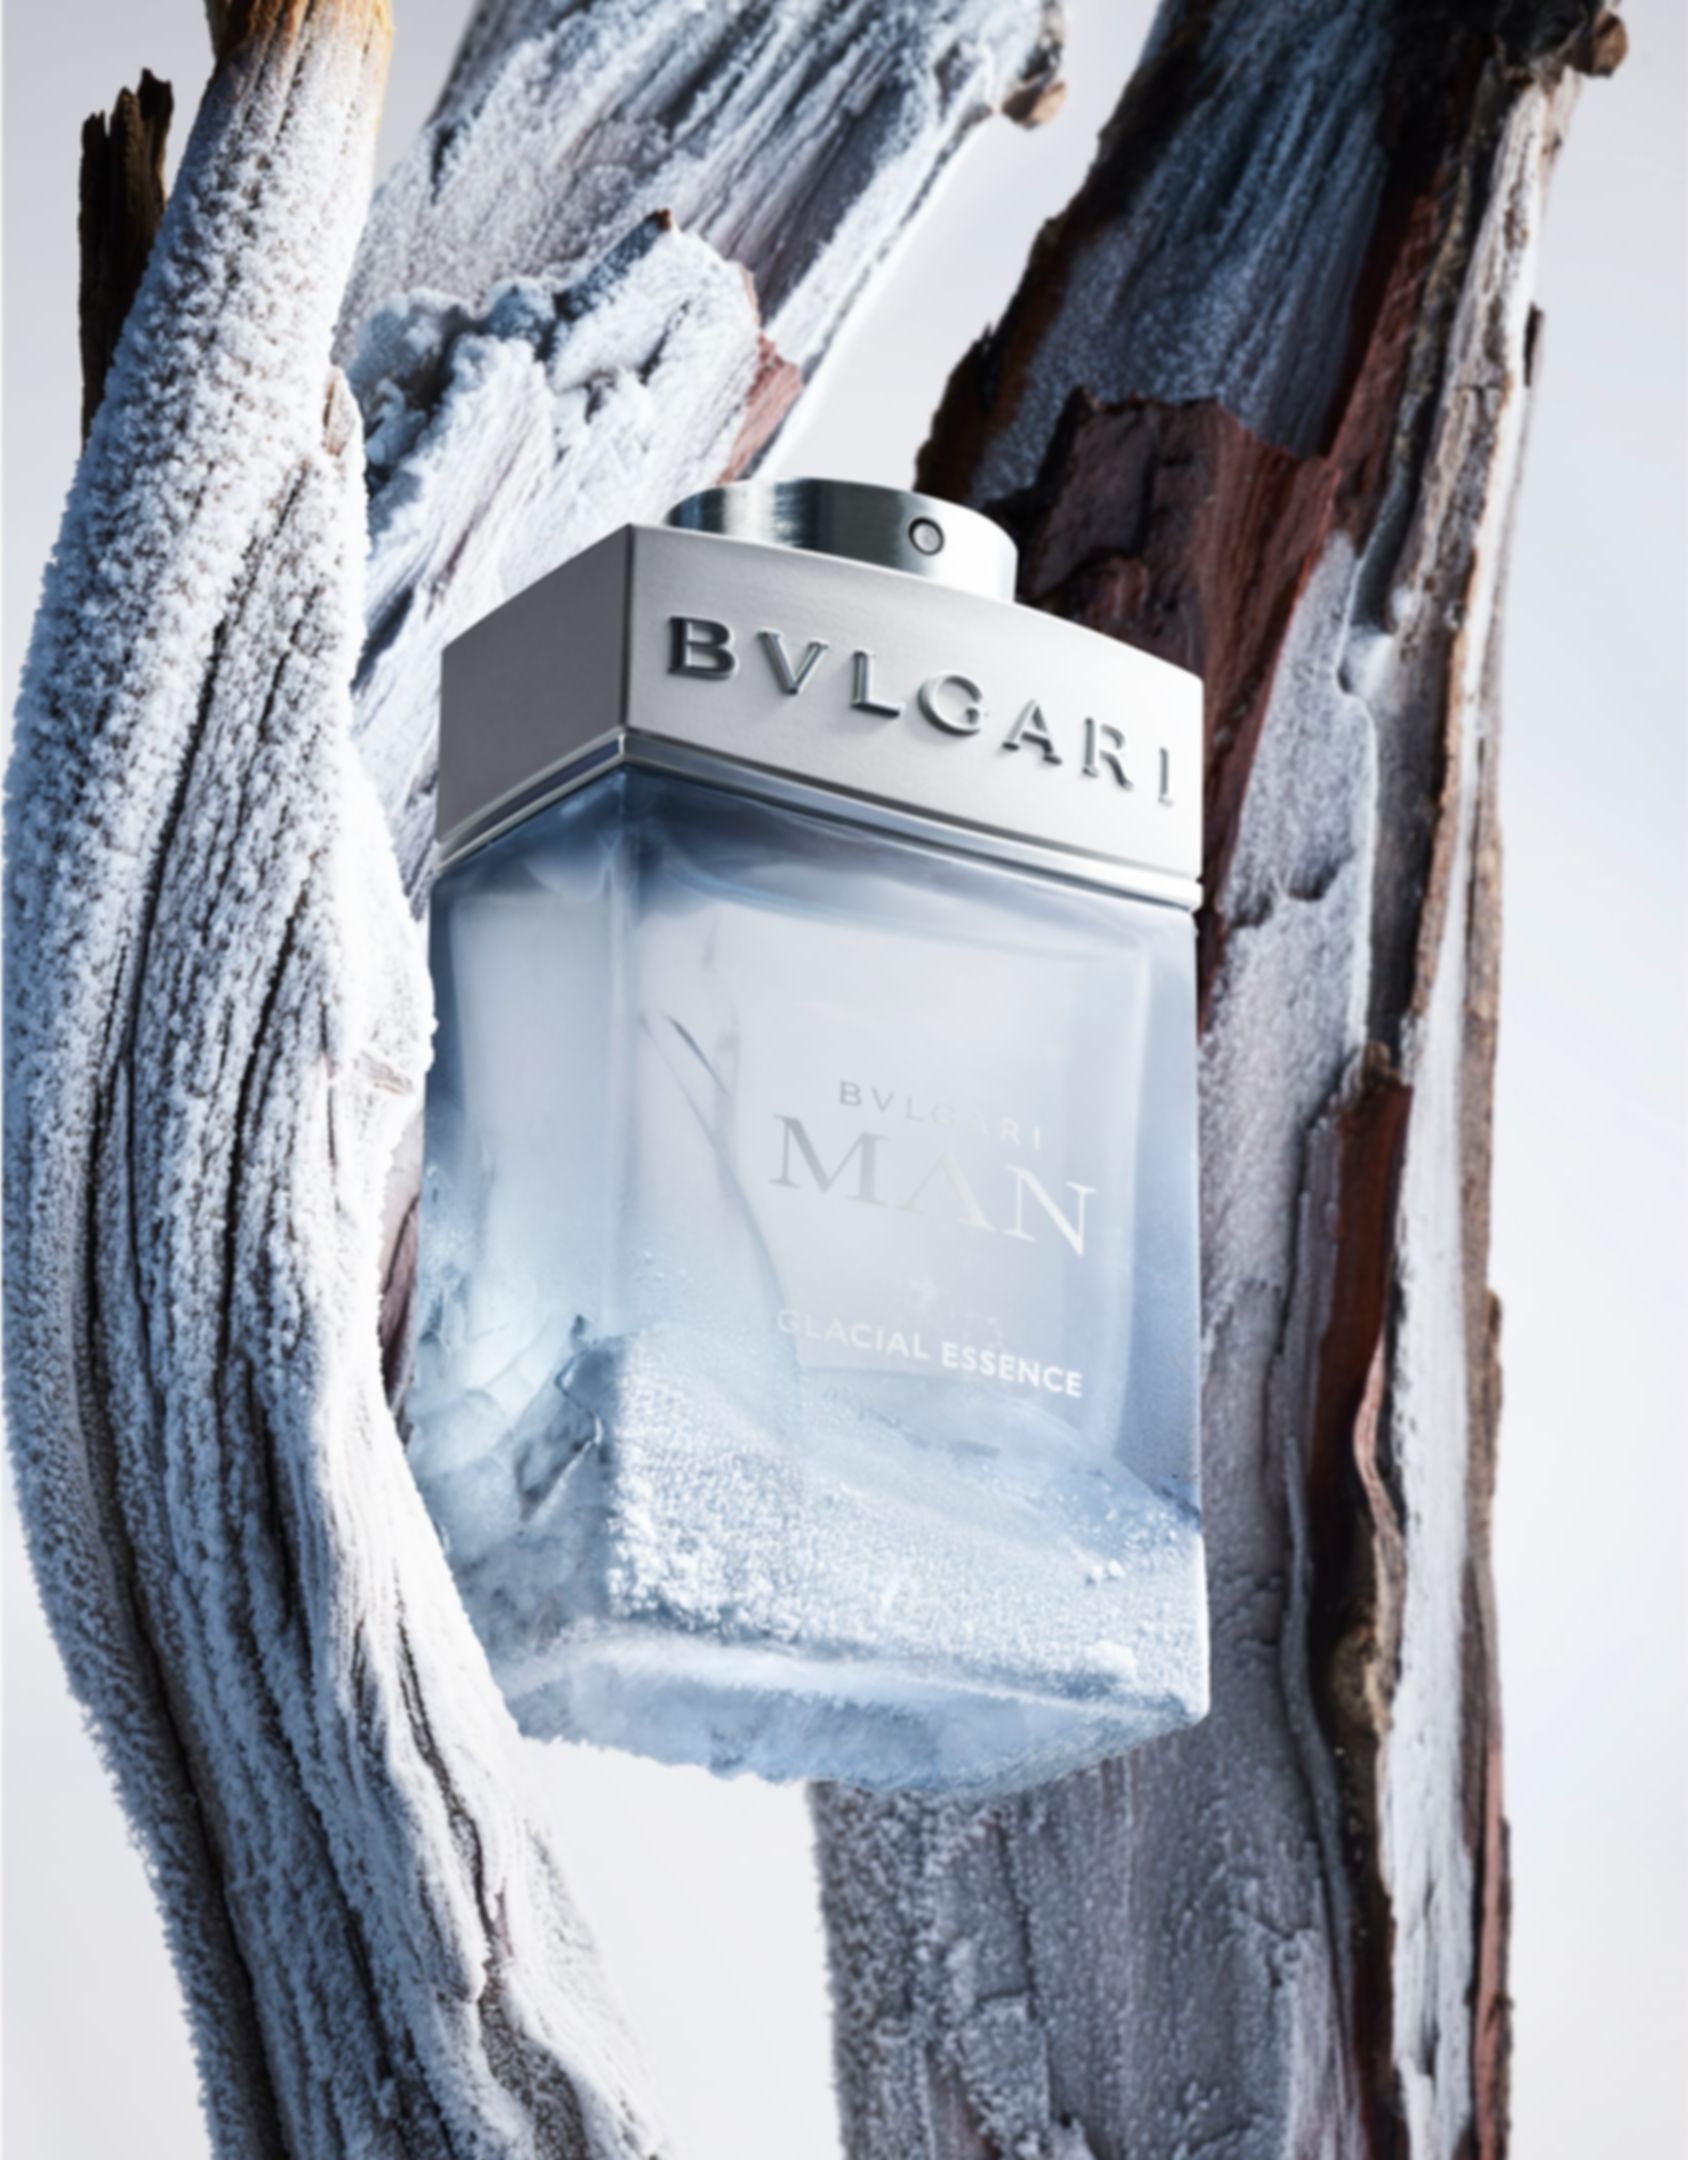 Bvlgari Man Glacial Essence Eau de parfum